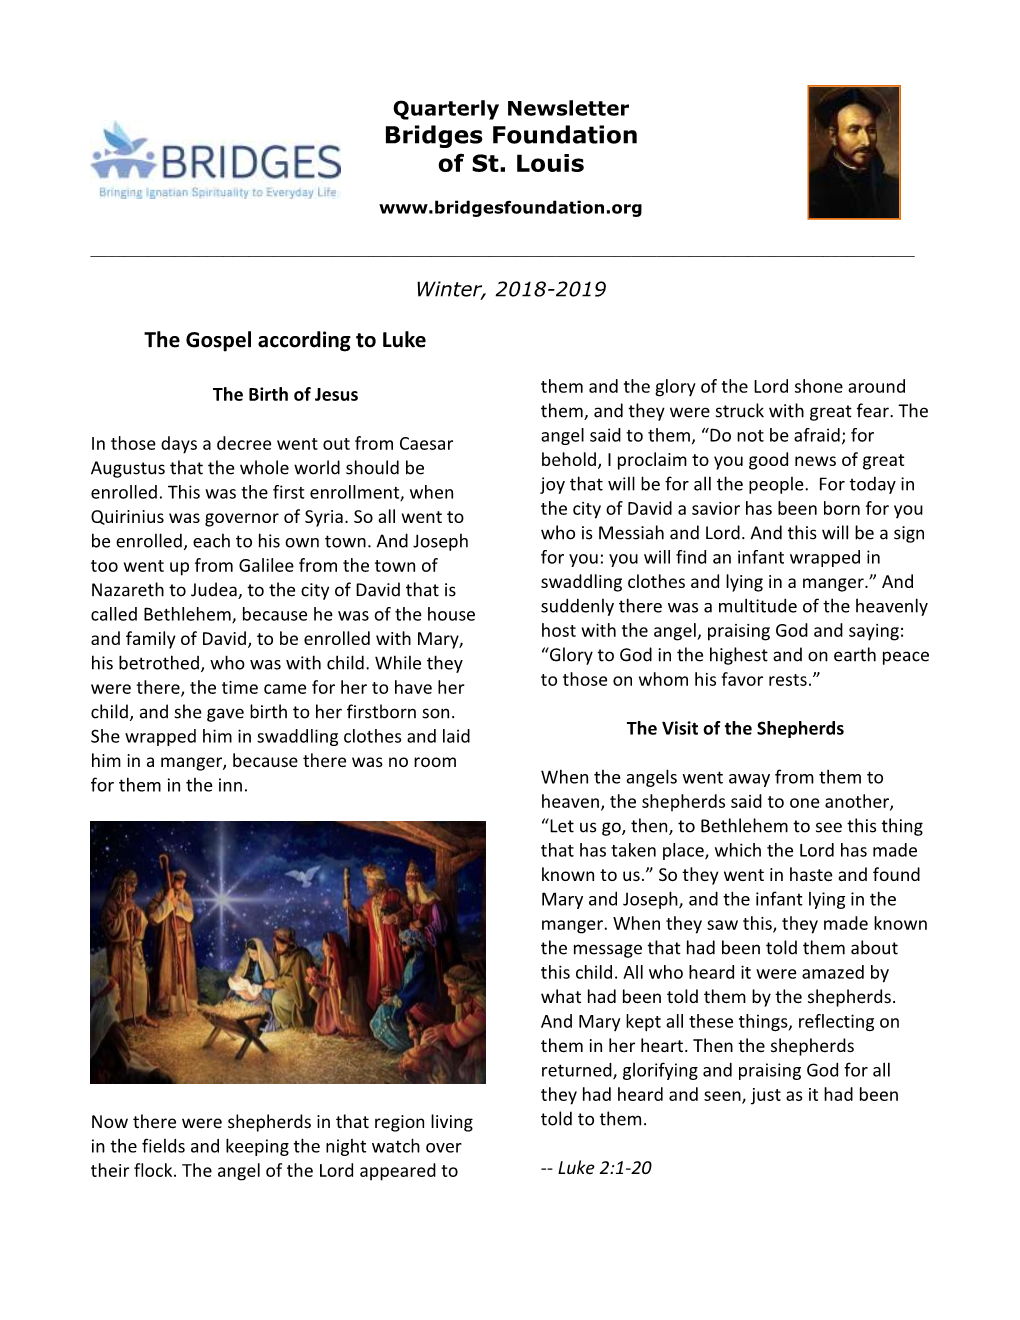 Bridges Newsletter Winter 2018